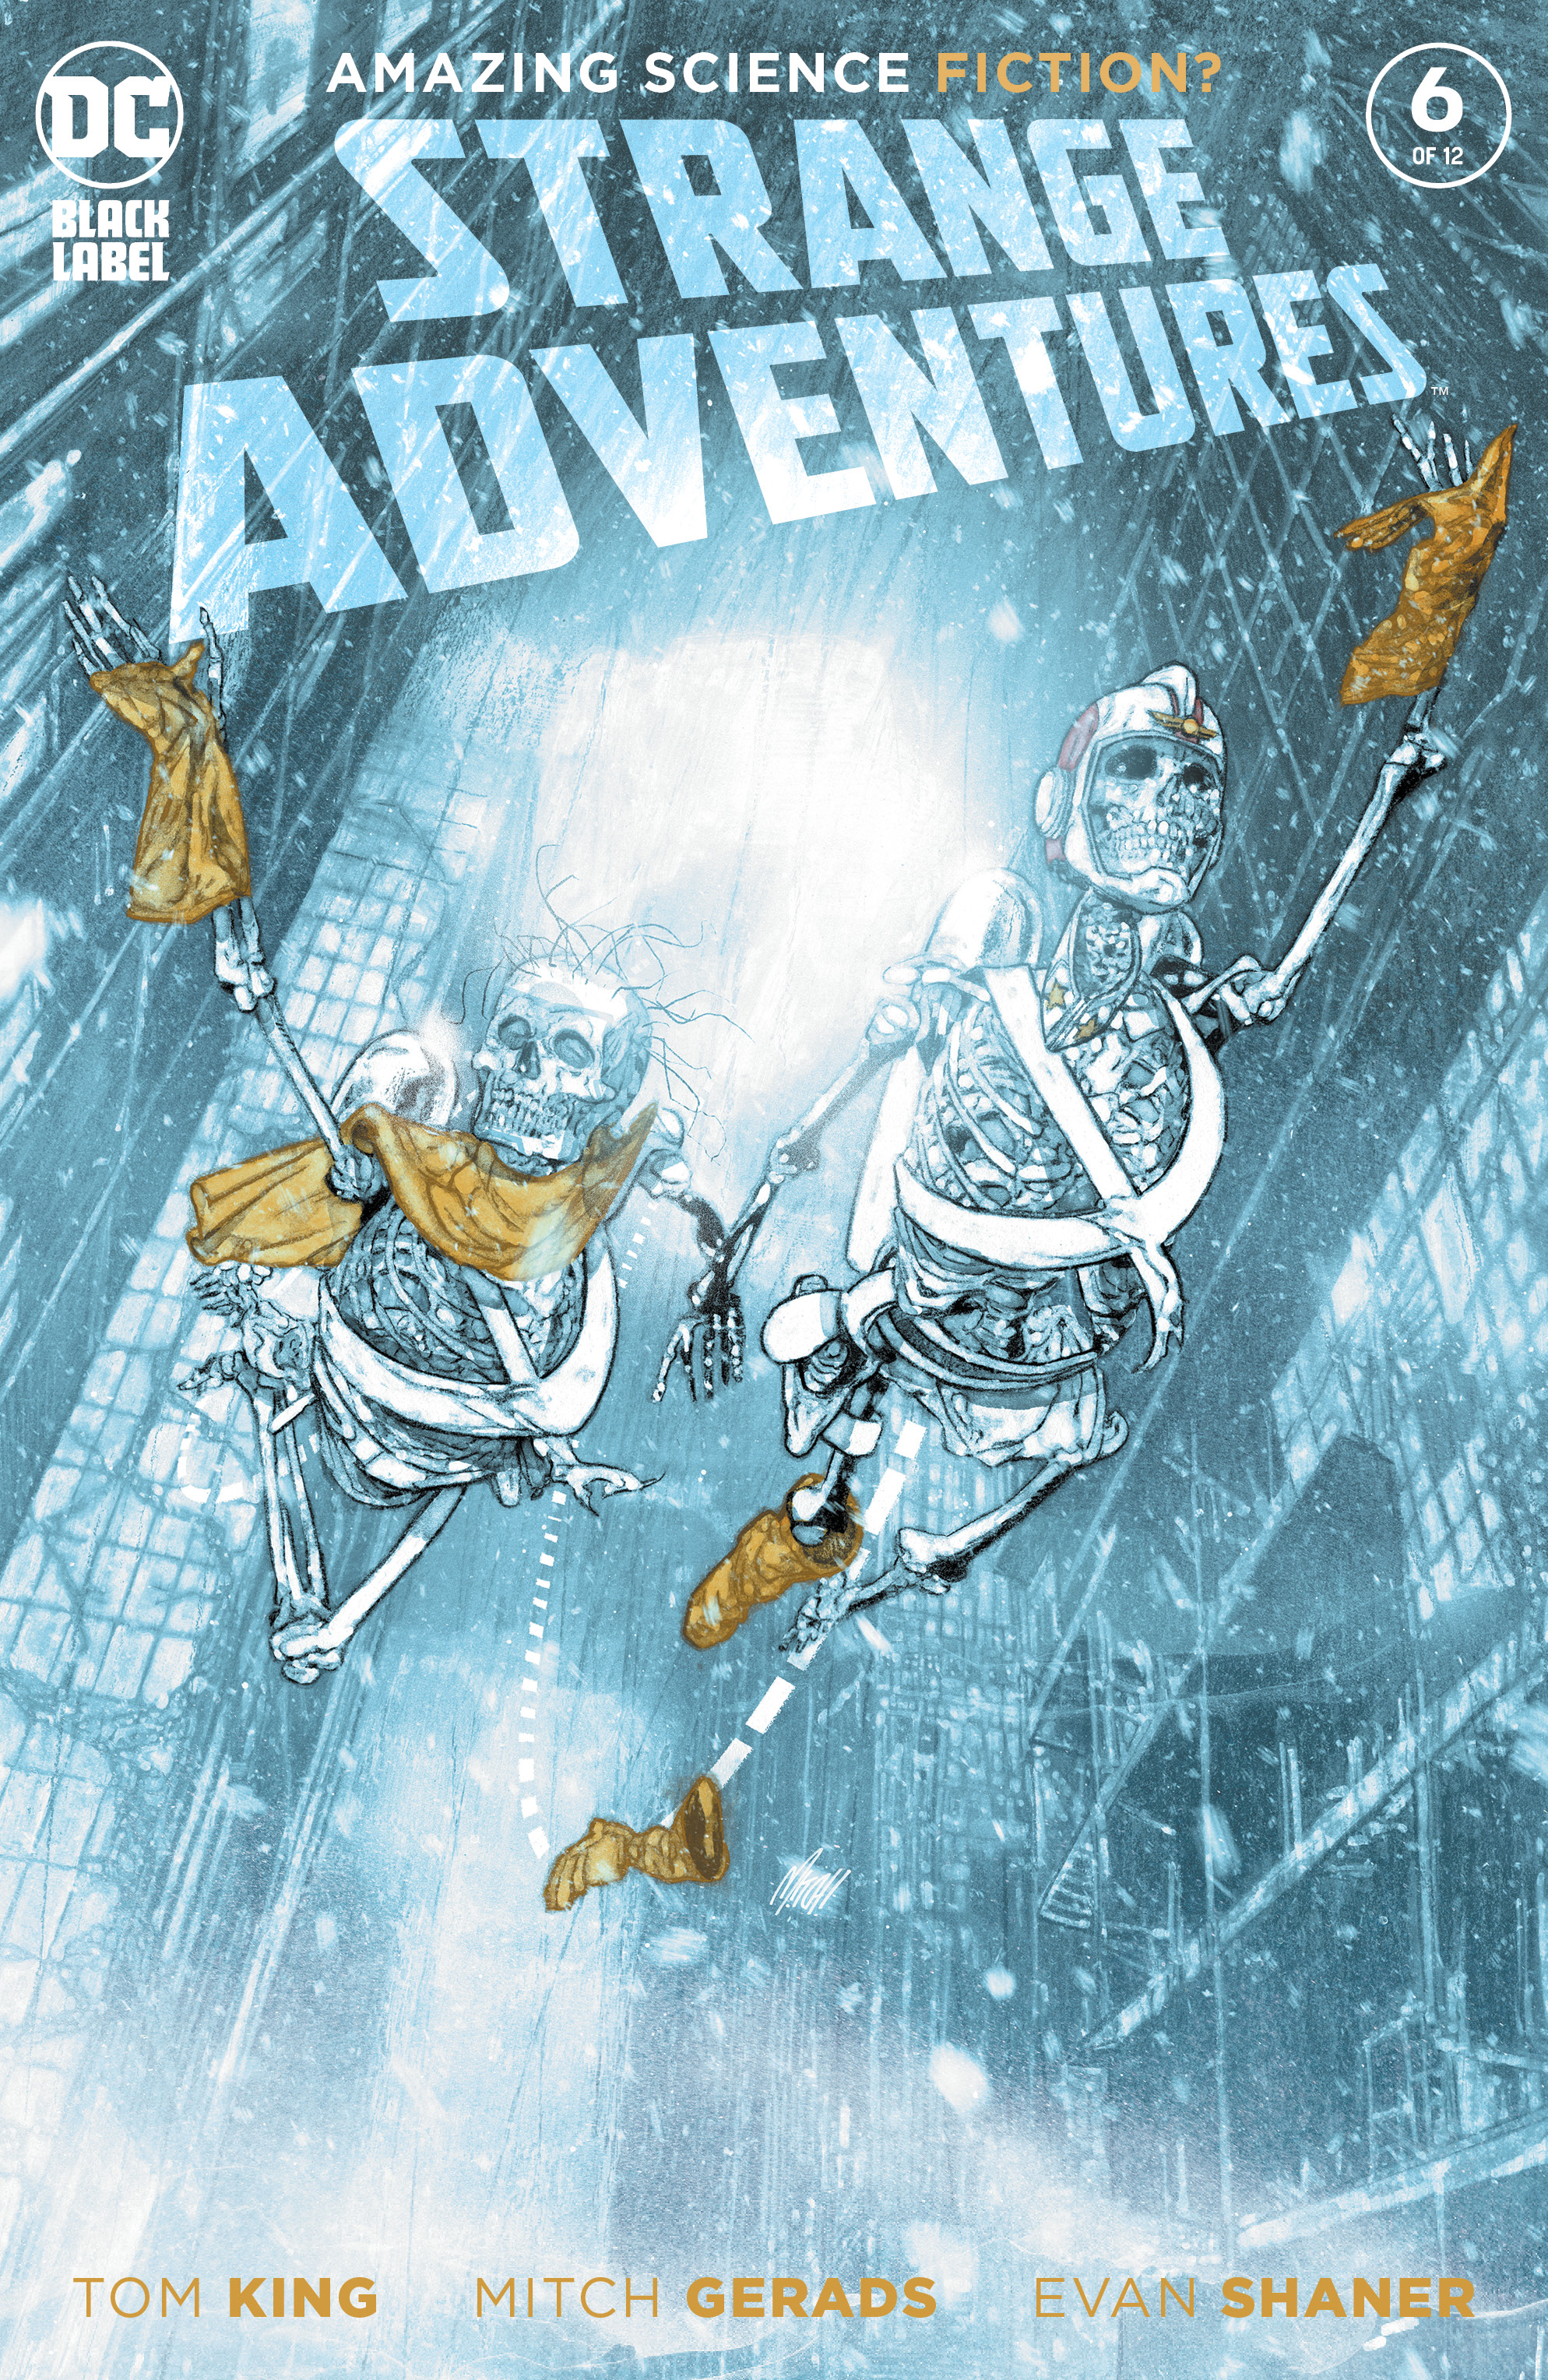 Strange Adventures #6 (Of 12) Cover A Mitch Gerads (Mature)